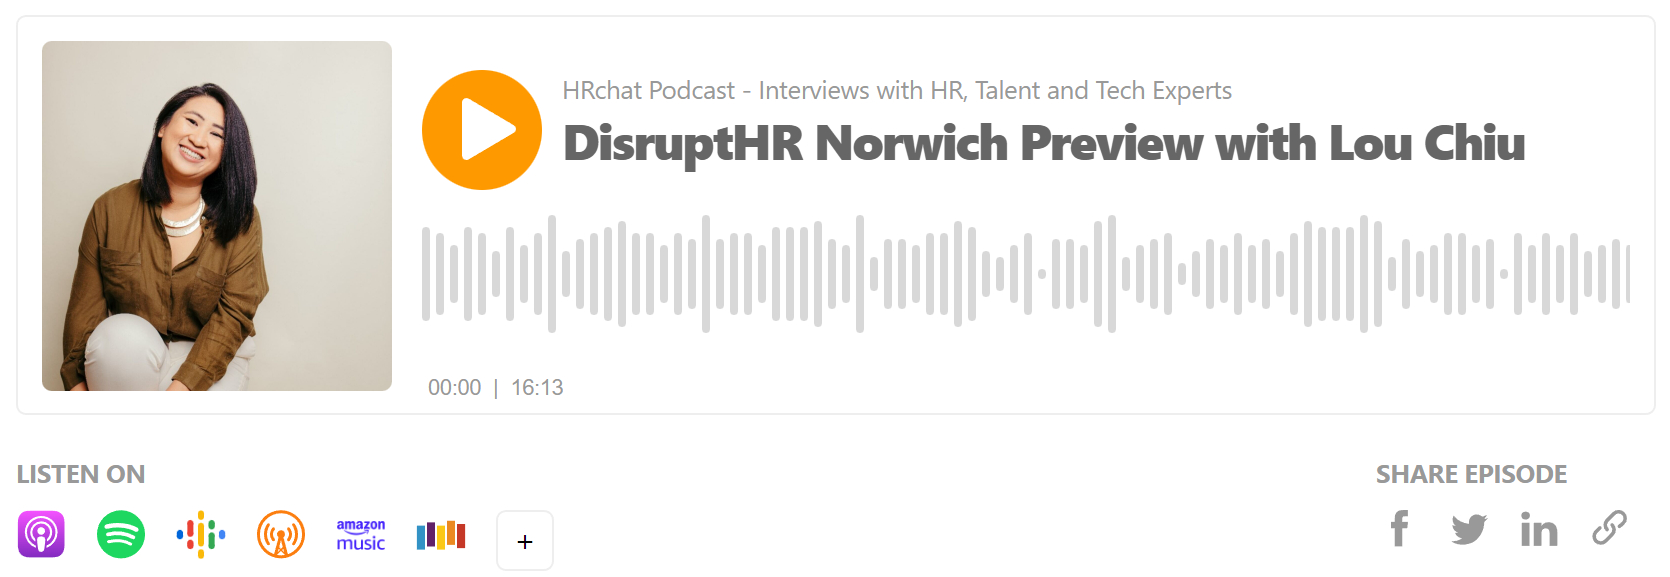 DisruptHR Norwich Preview with Lou Chiu